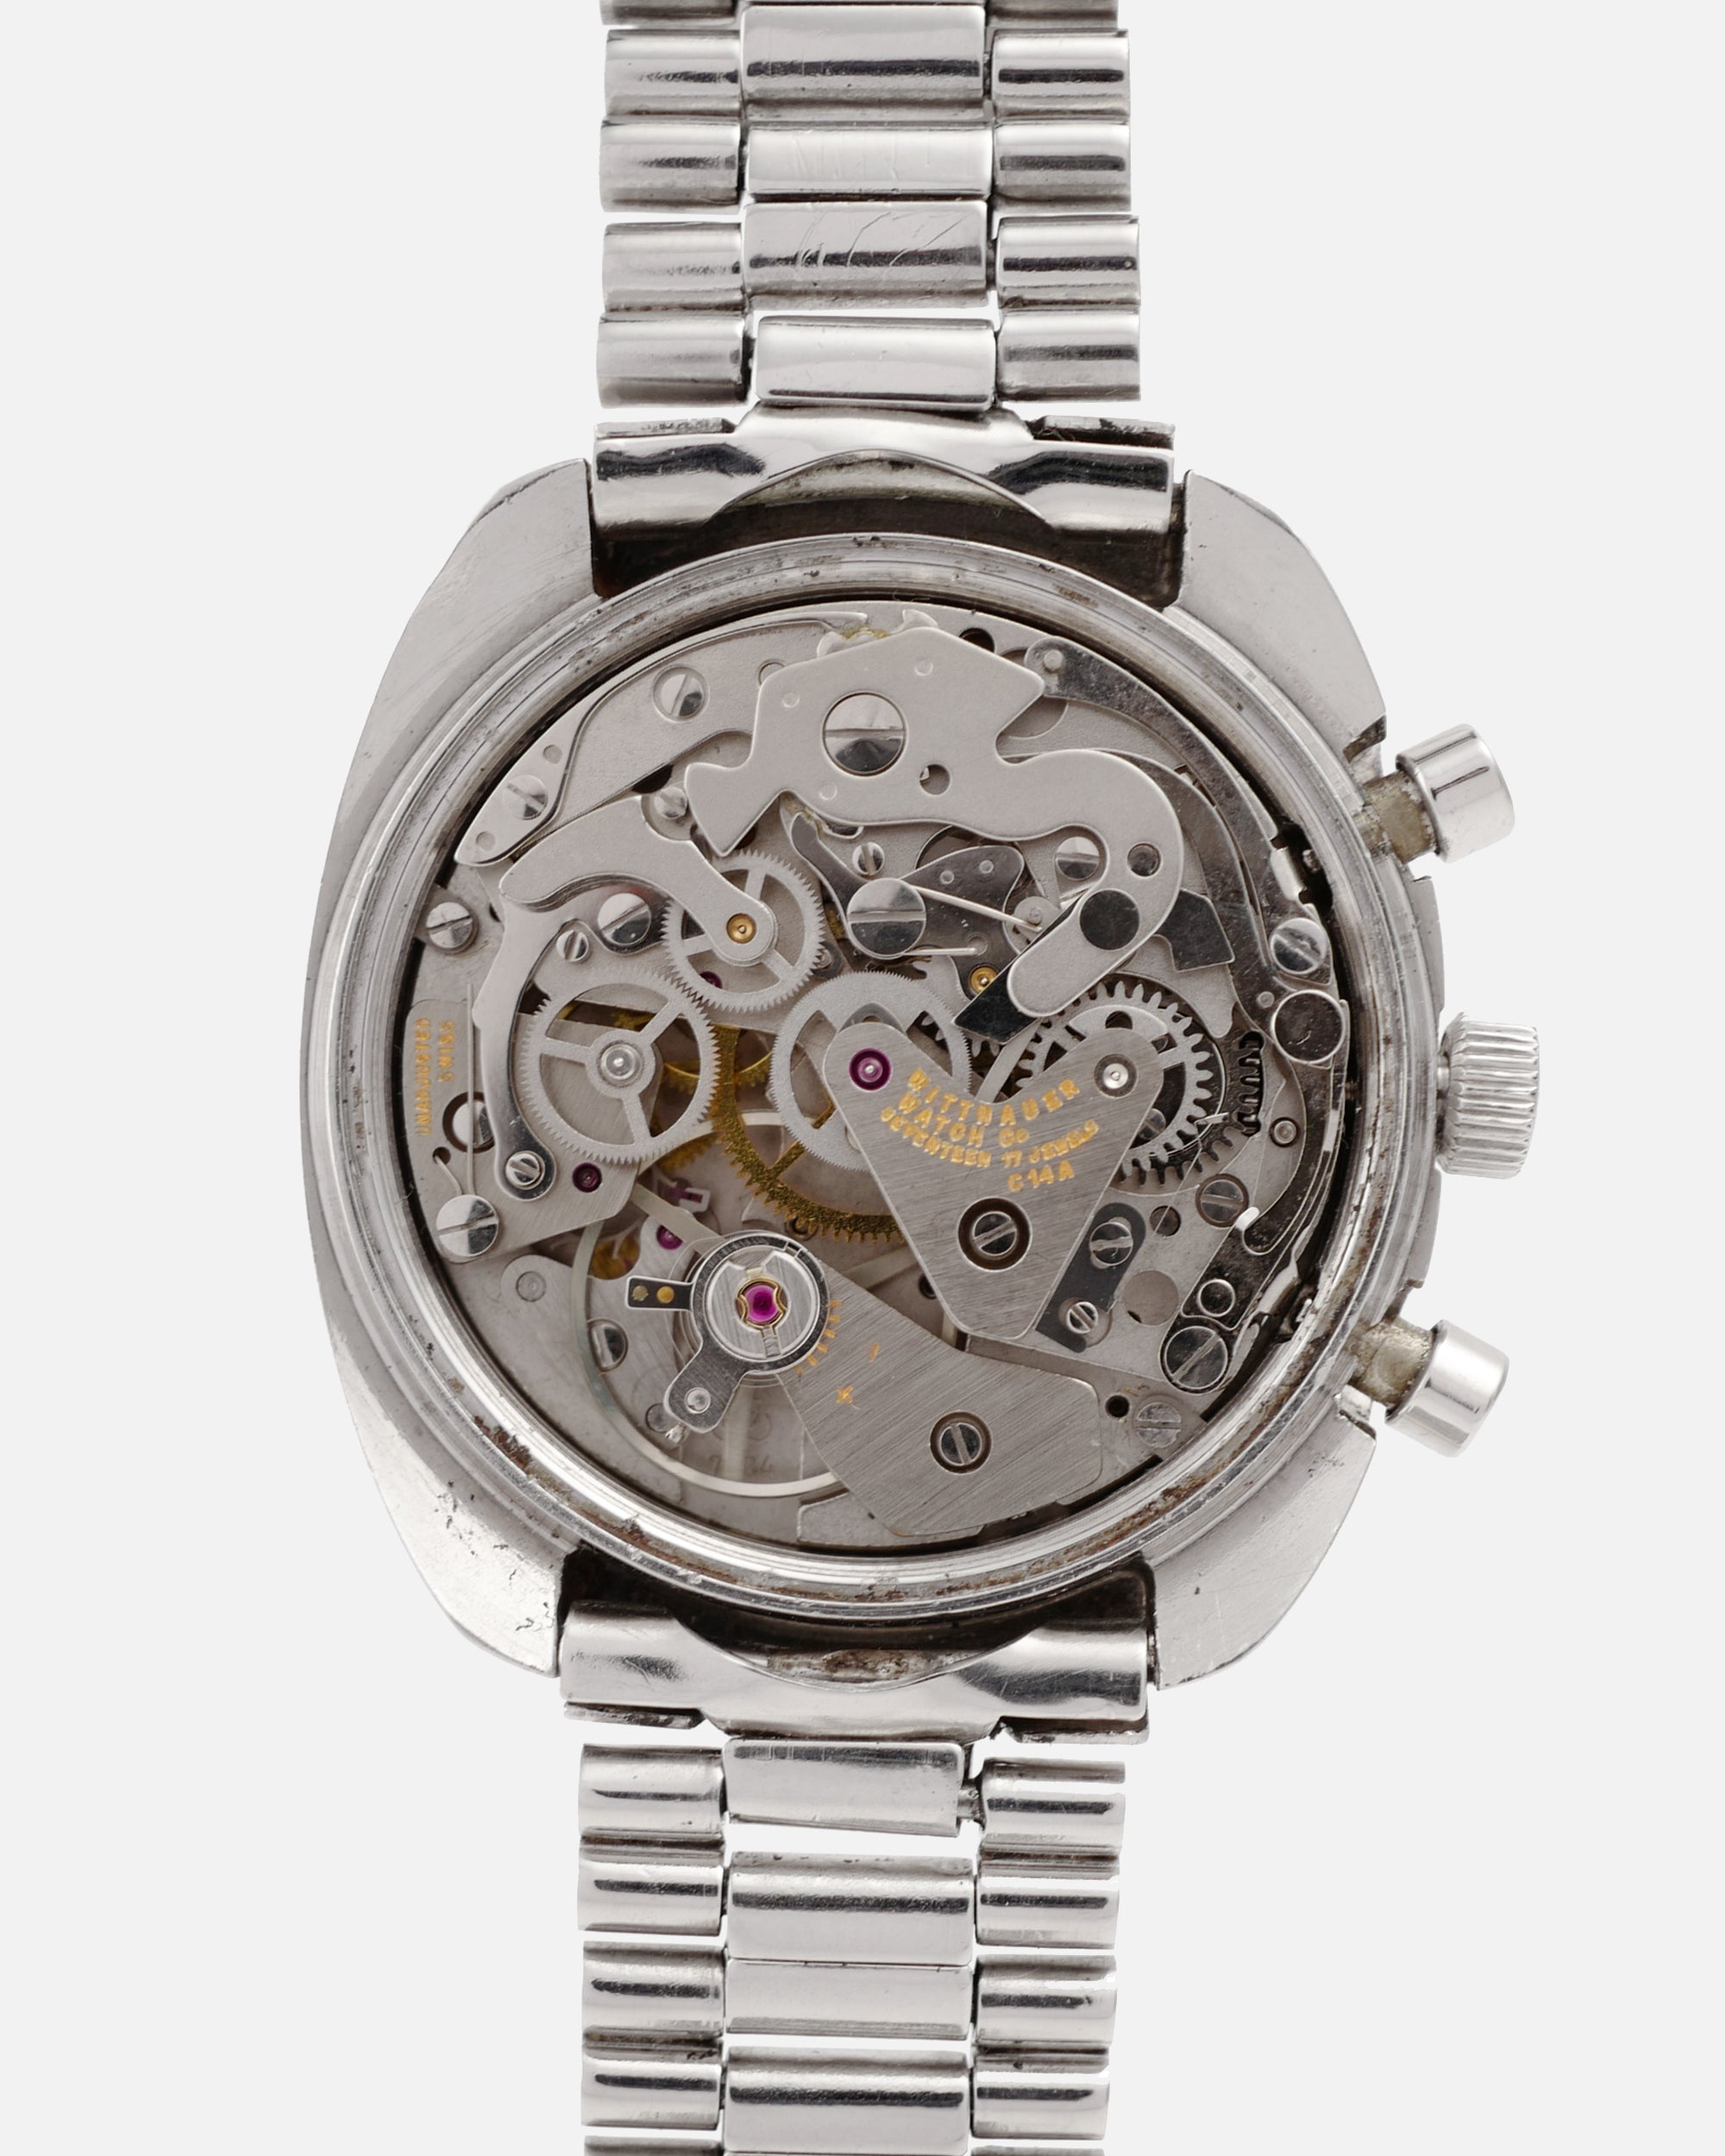 1970s Wittnauer Professional Chronograph Chrono-Date | Valjoux 7734 | Ref. 5009